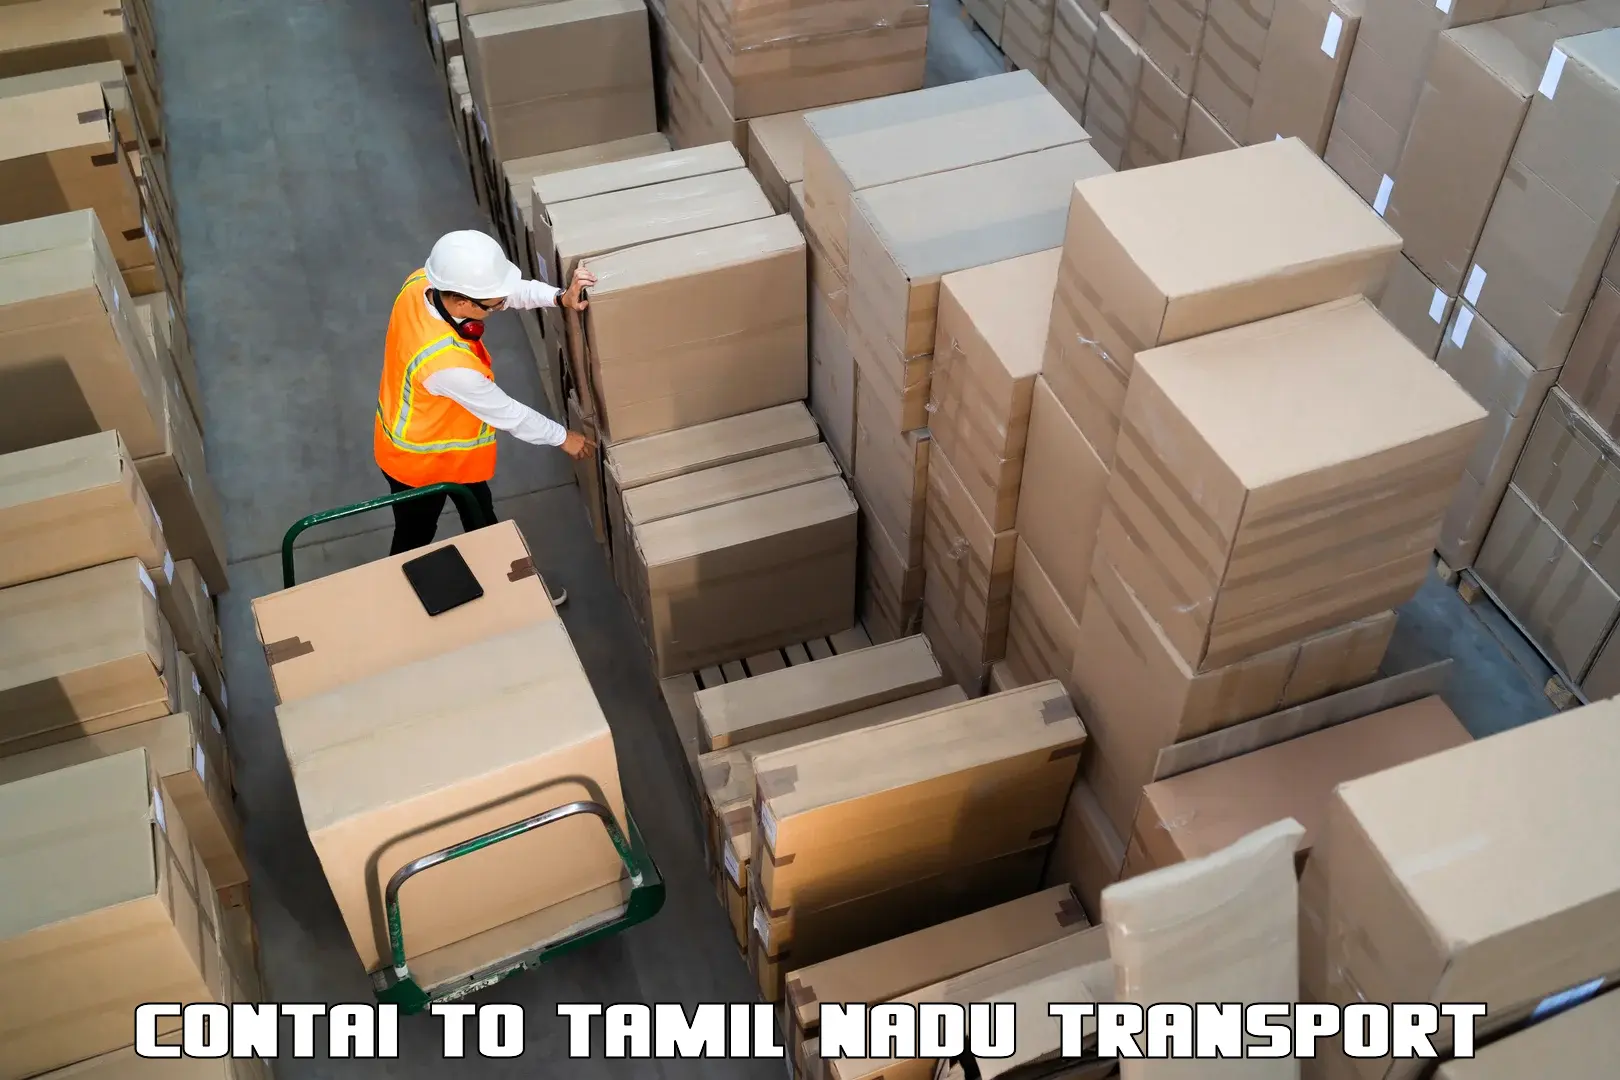 Bike transport service Contai to Tamil Nadu